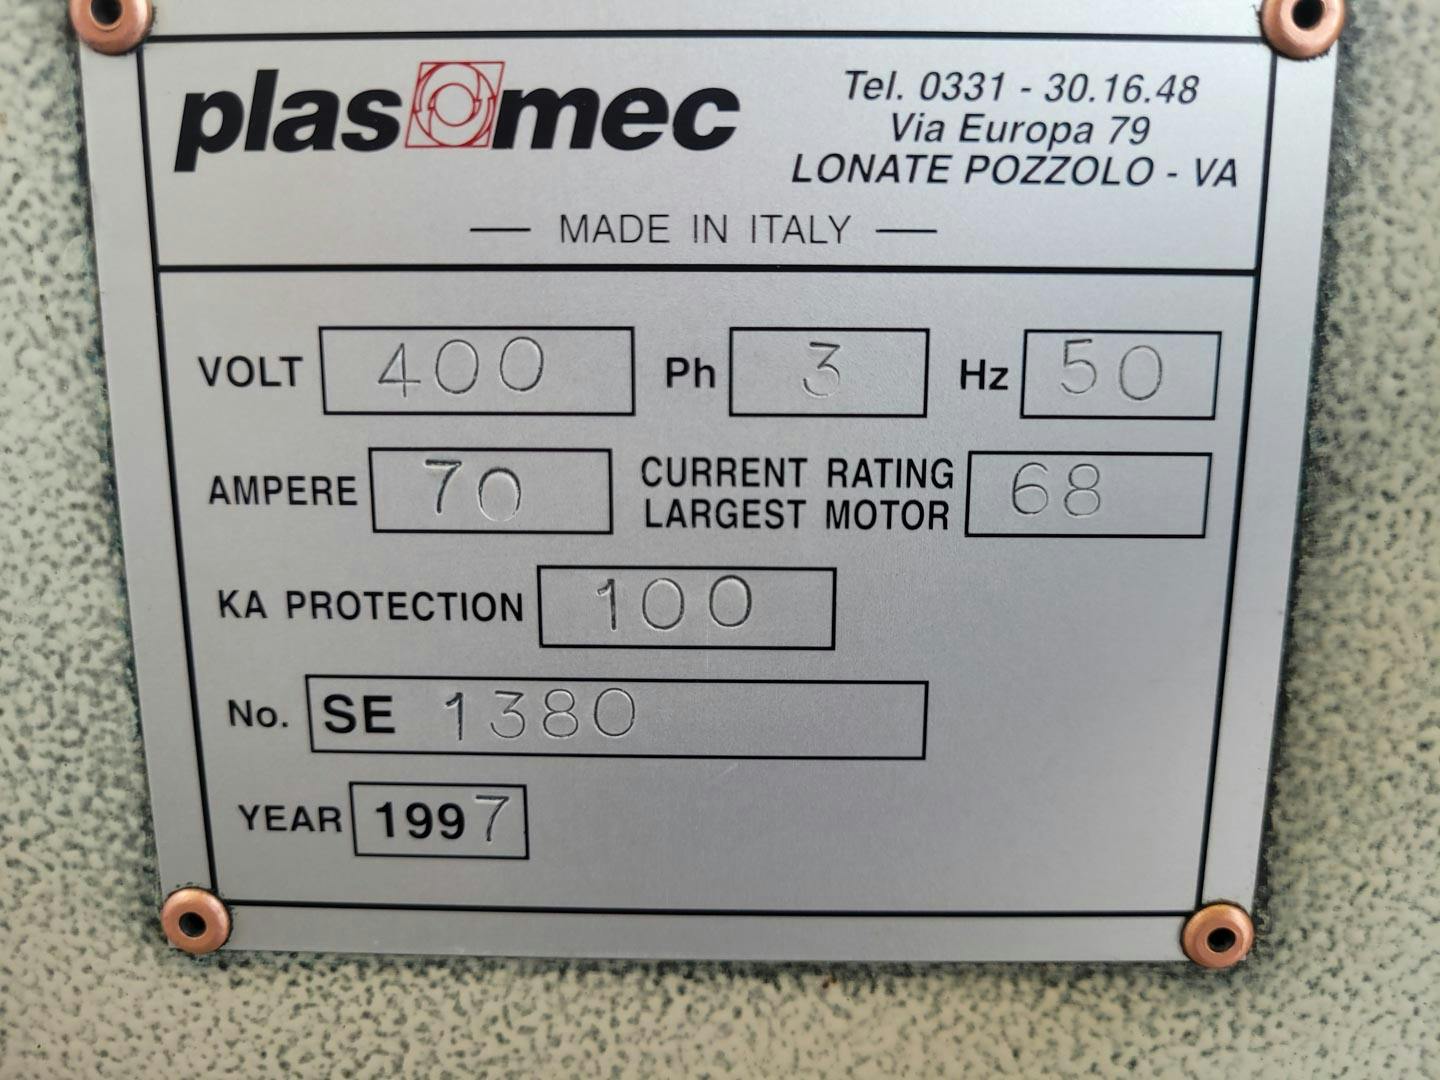 Plasmec TRM 200 - Mezclador en caliente - image 17